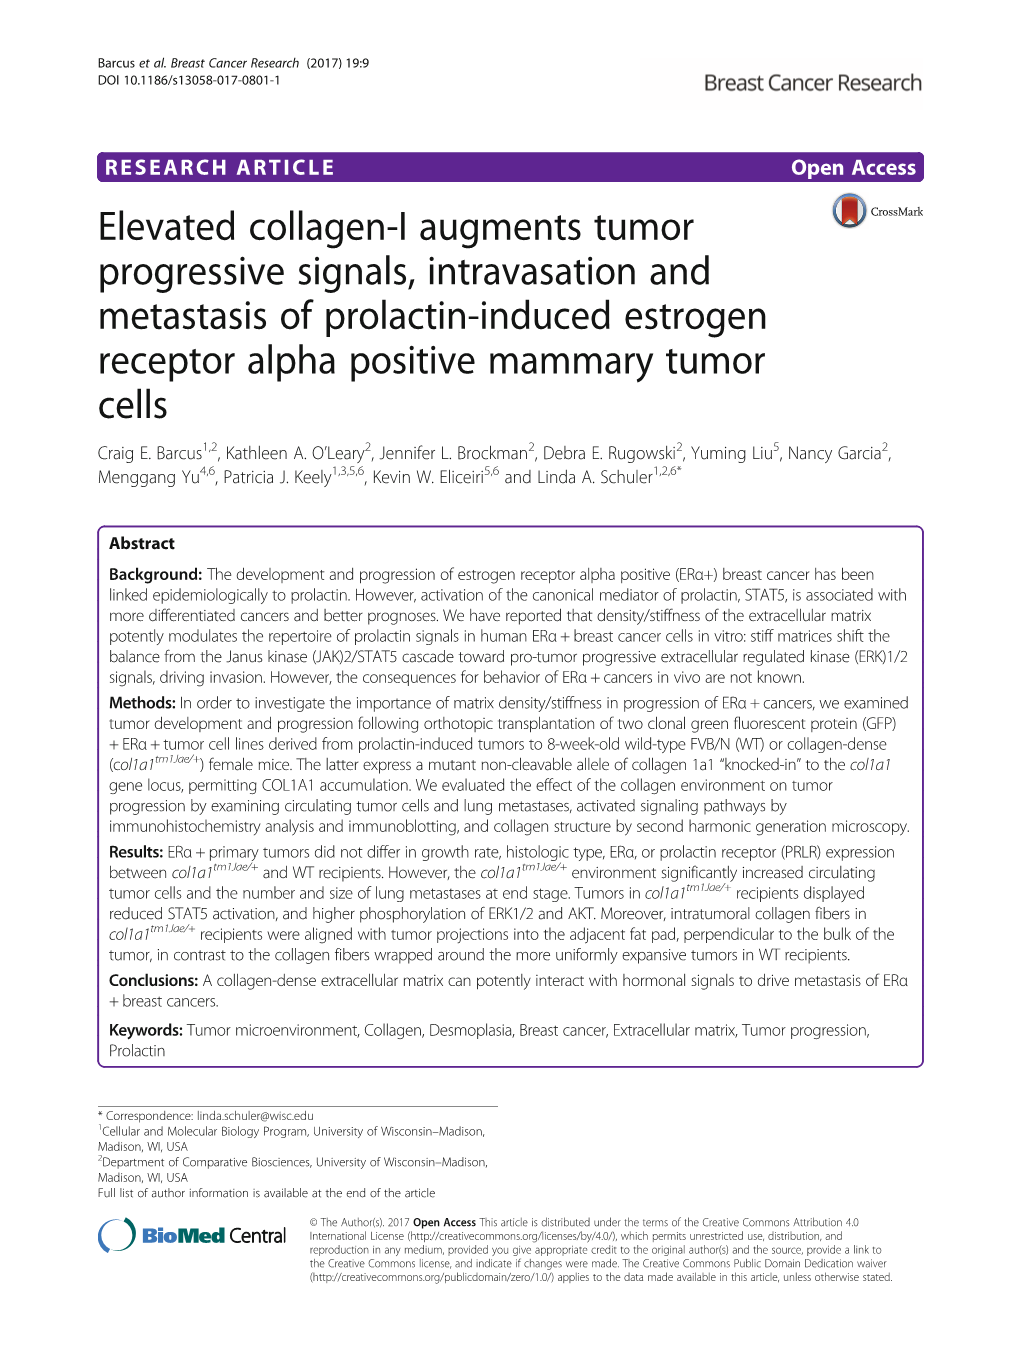 Elevated Collagen-I Augments Tumor Progressive Signals, Intravasation and Metastasis of Prolactin-Induced Estrogen Receptor Alpha Positive Mammary Tumor Cells Craig E